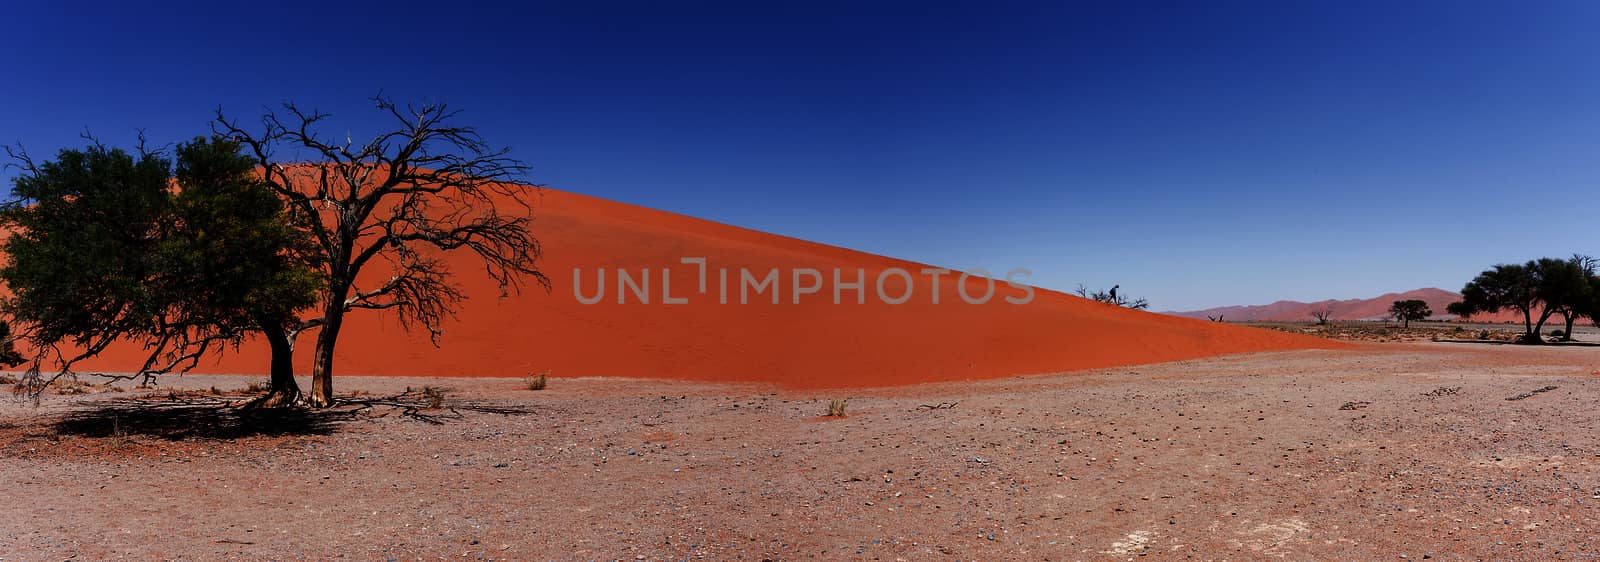 wide panorama Dune 45 in sossusvlei Namibia by artush